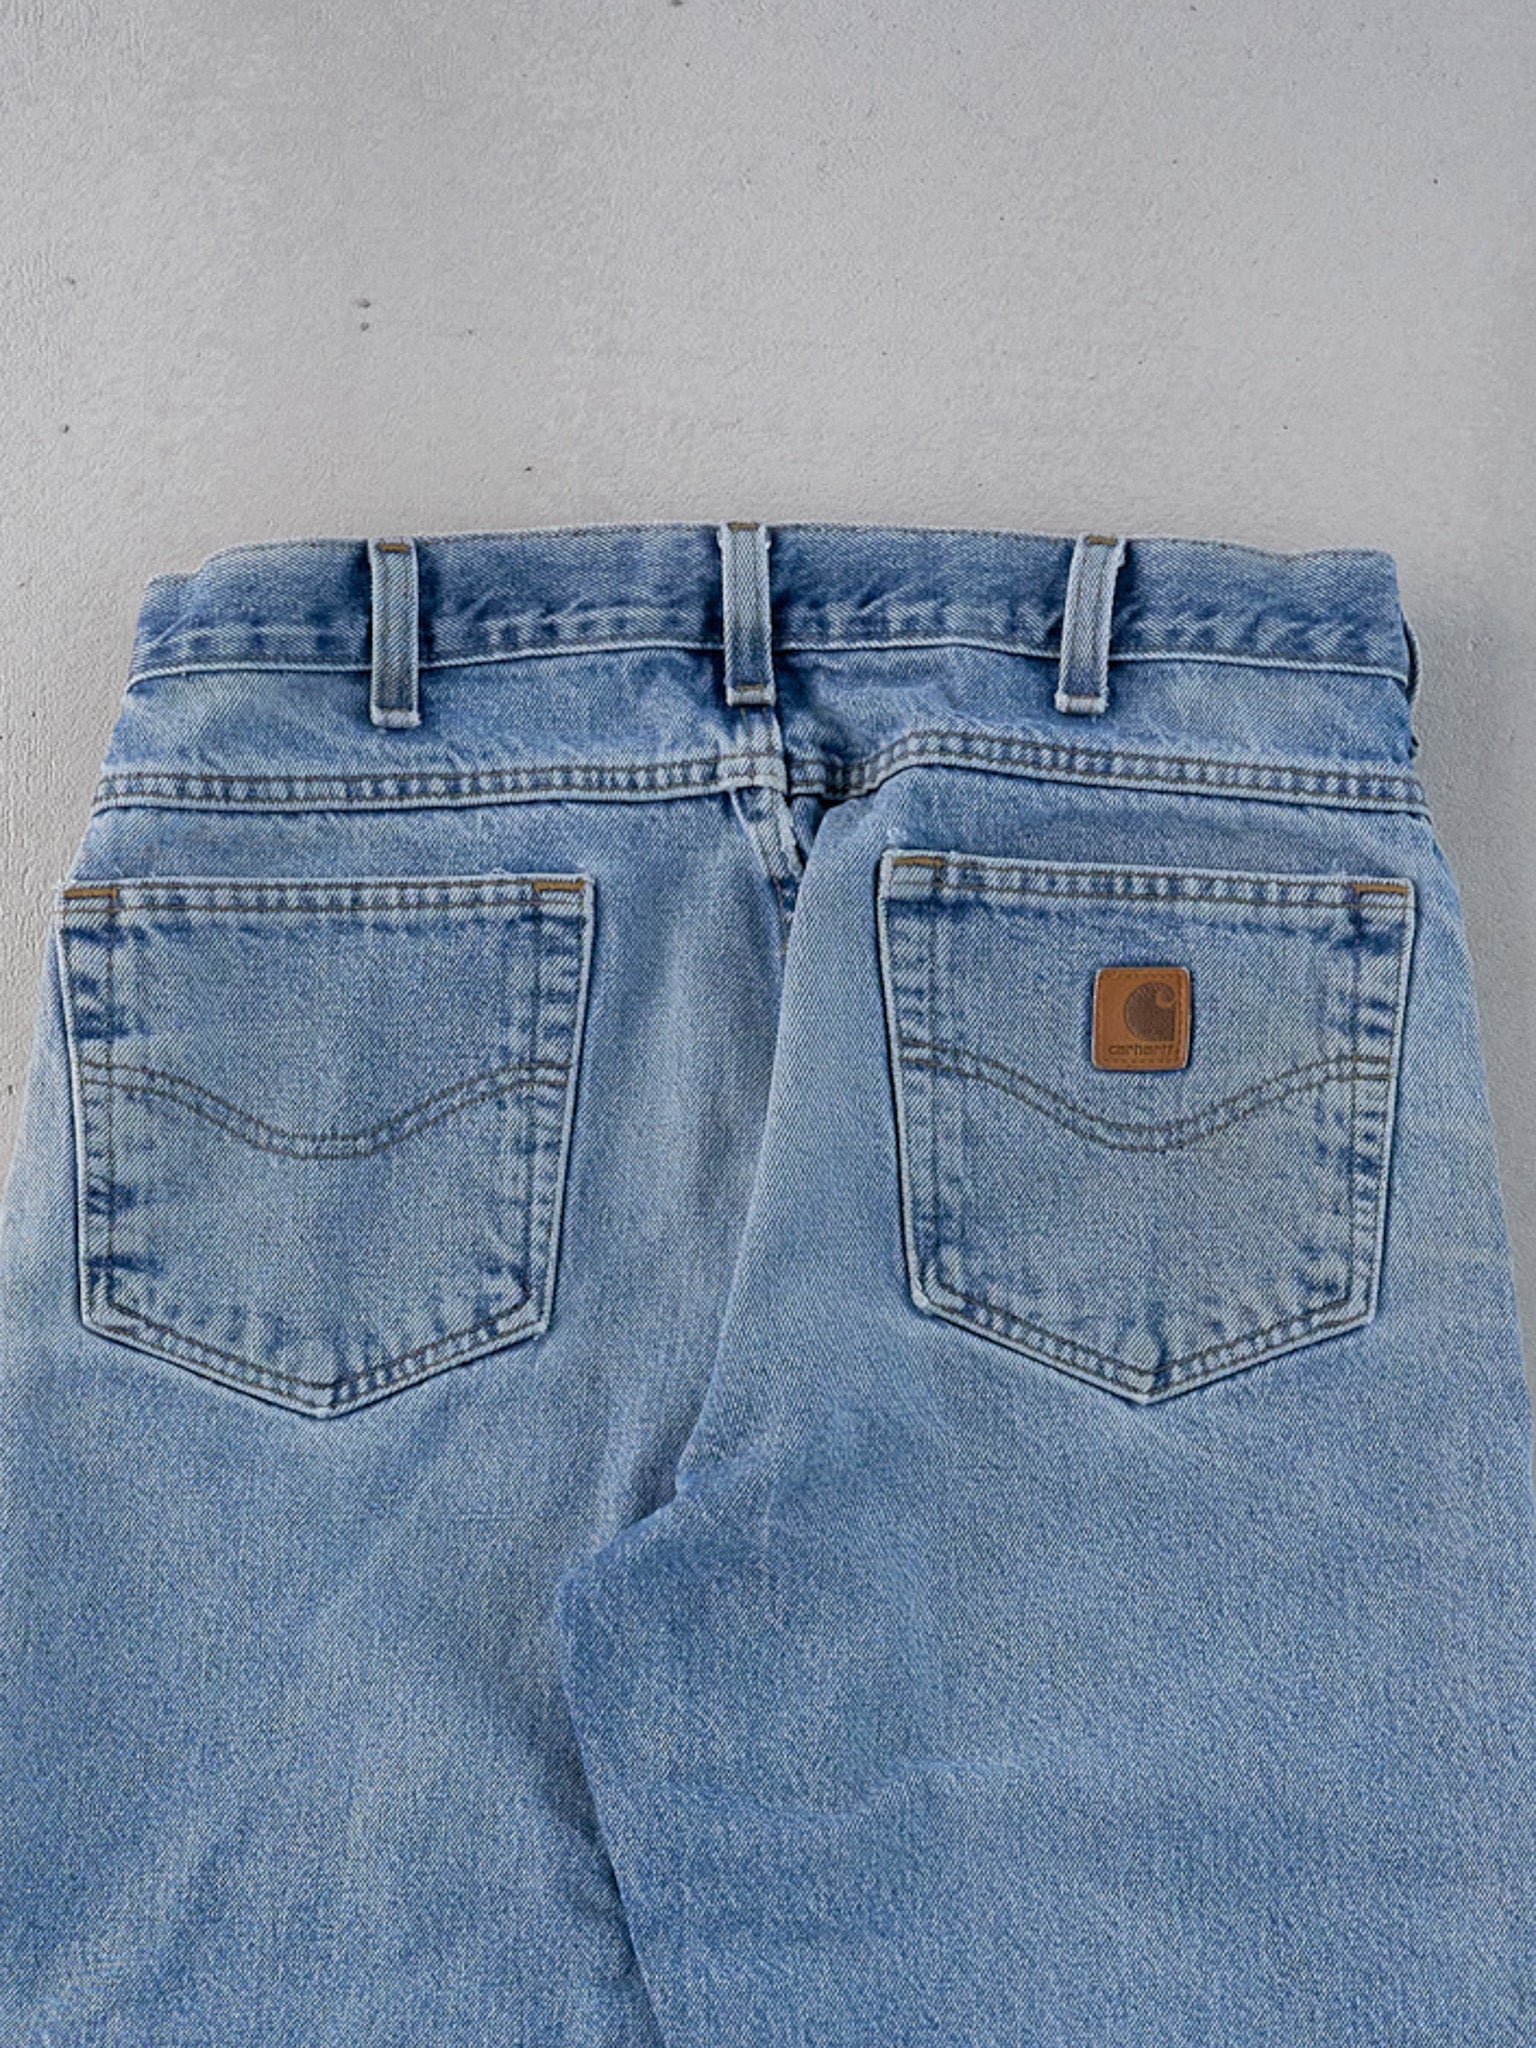 Vintage 90s Washed Blue Carhartt Distressed Denim Jeans (31x31)